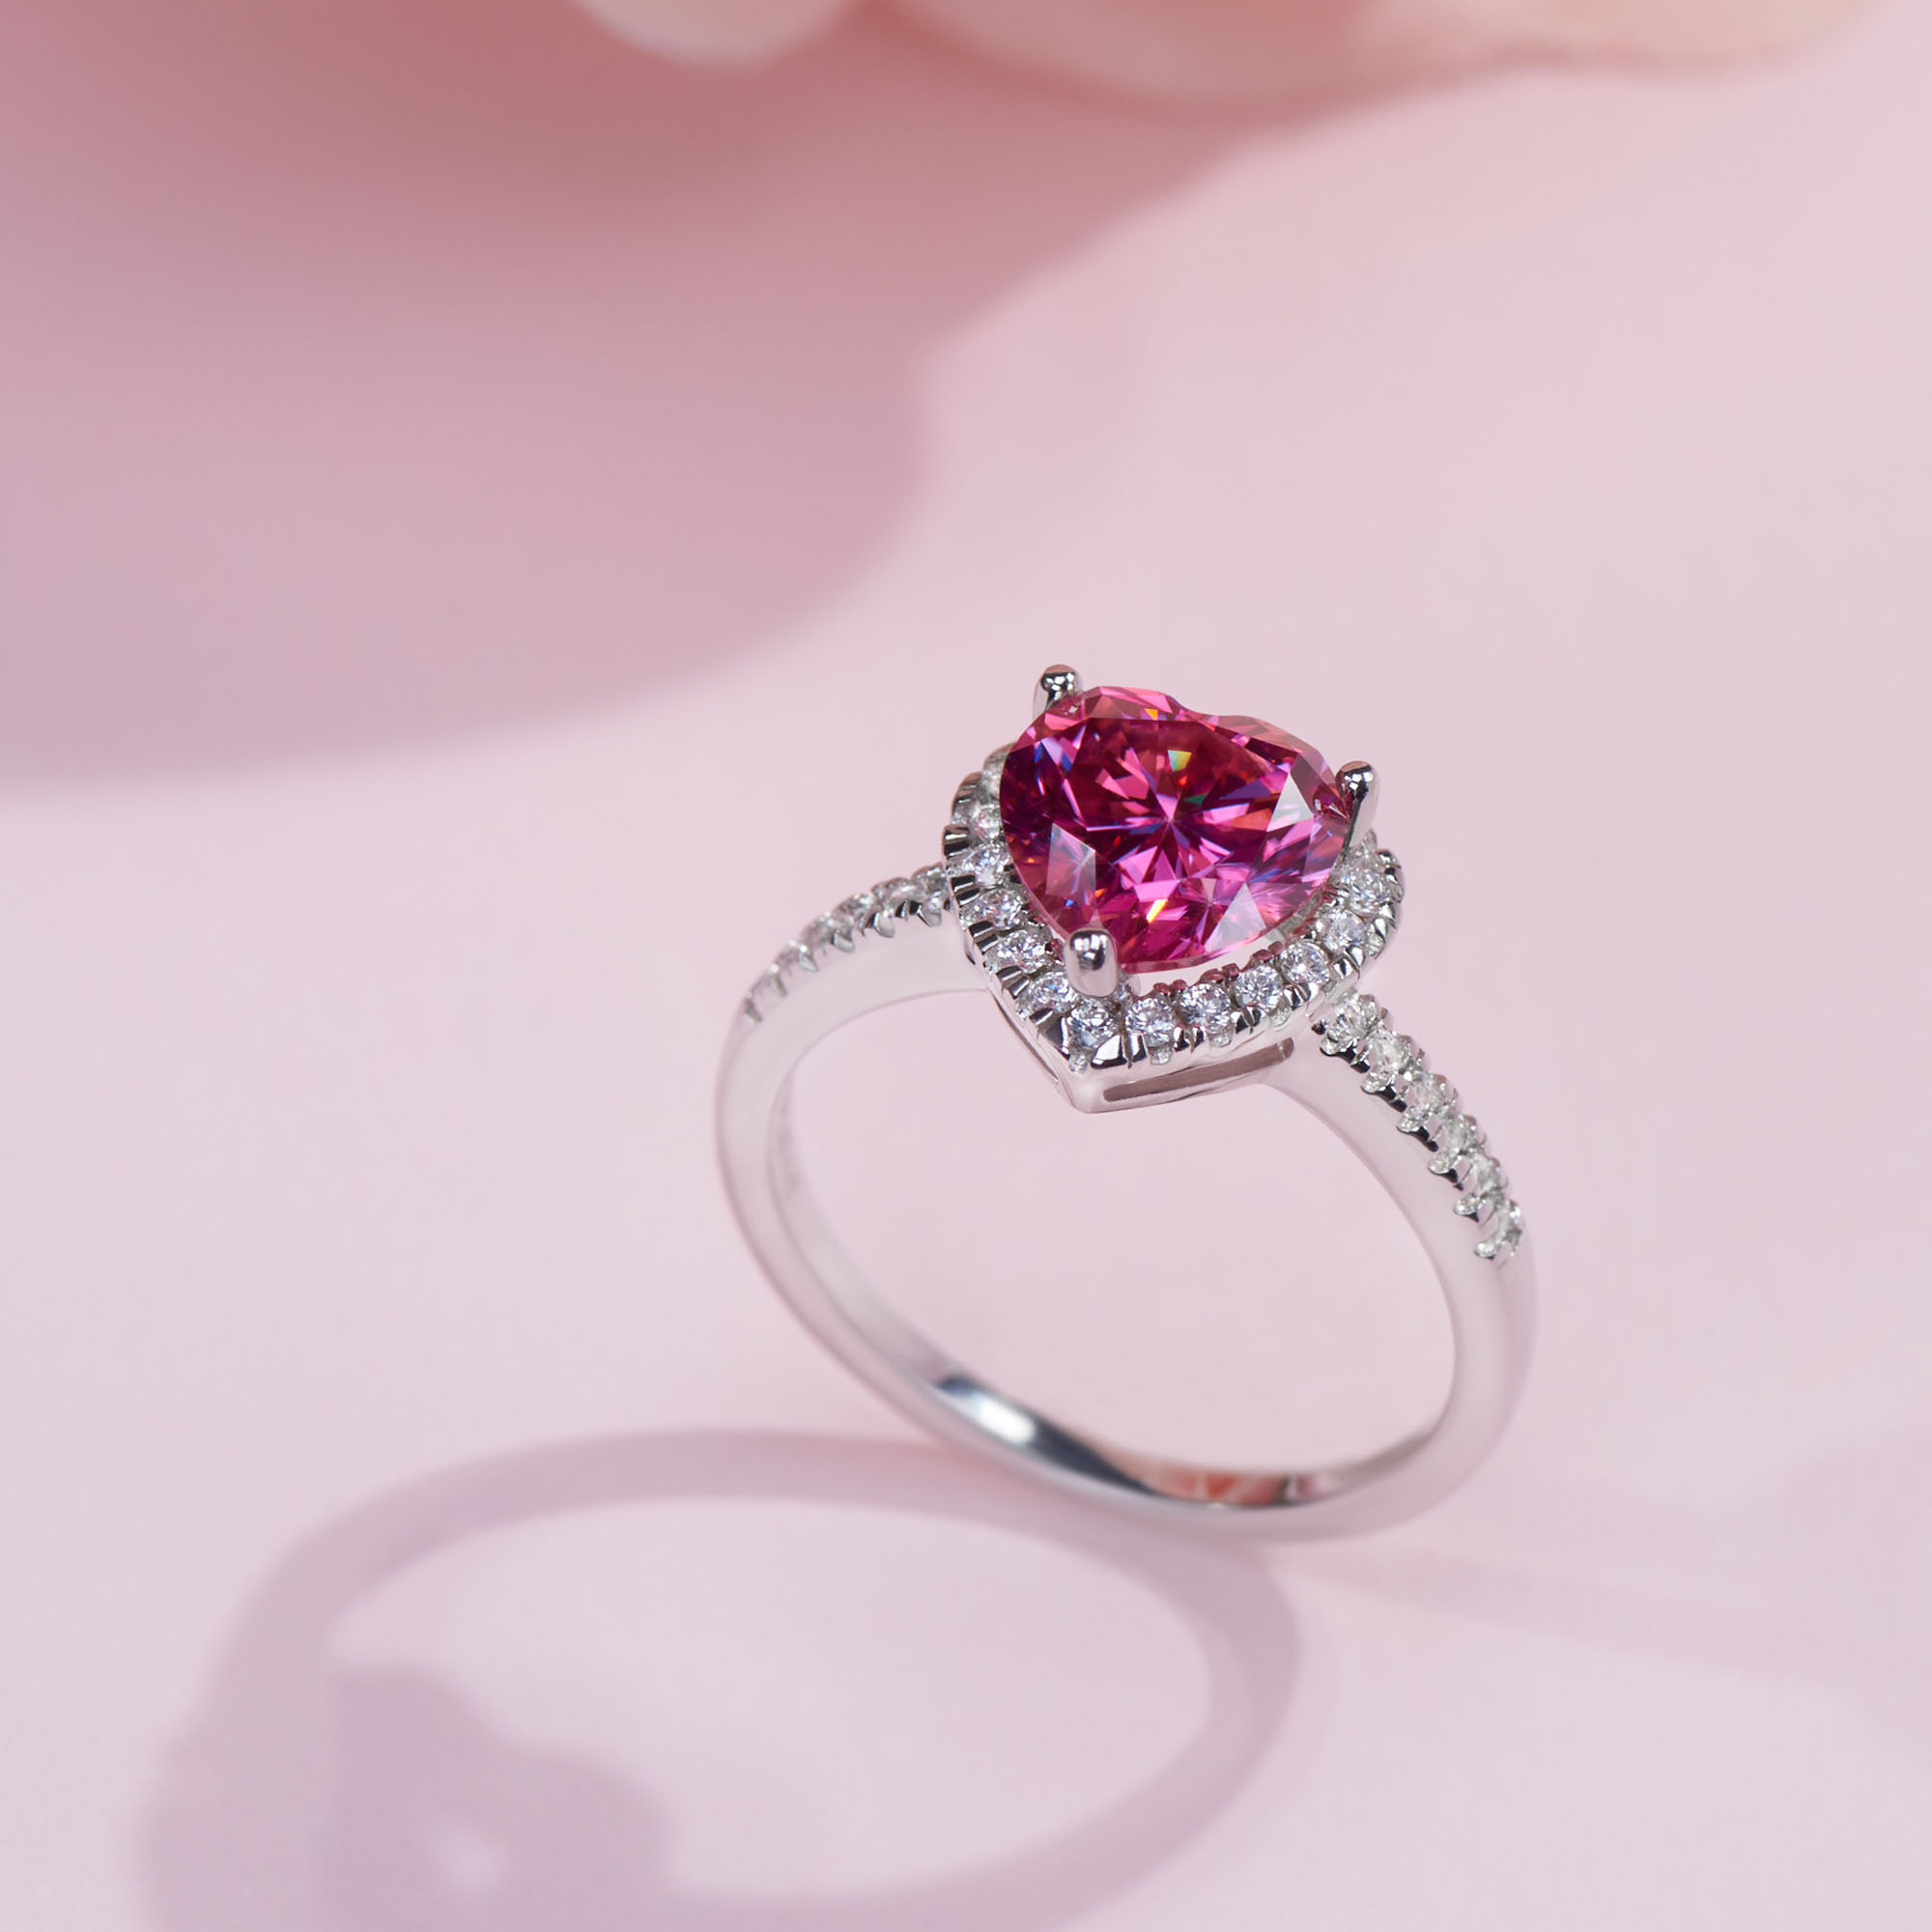 GIGAJEWE Moissanite 2.0ct 8.0mm Pink Color VVS1 Heart Cut 925 Silver Ring Diamond Test Passed Fashion Woman Girlfriend Gift